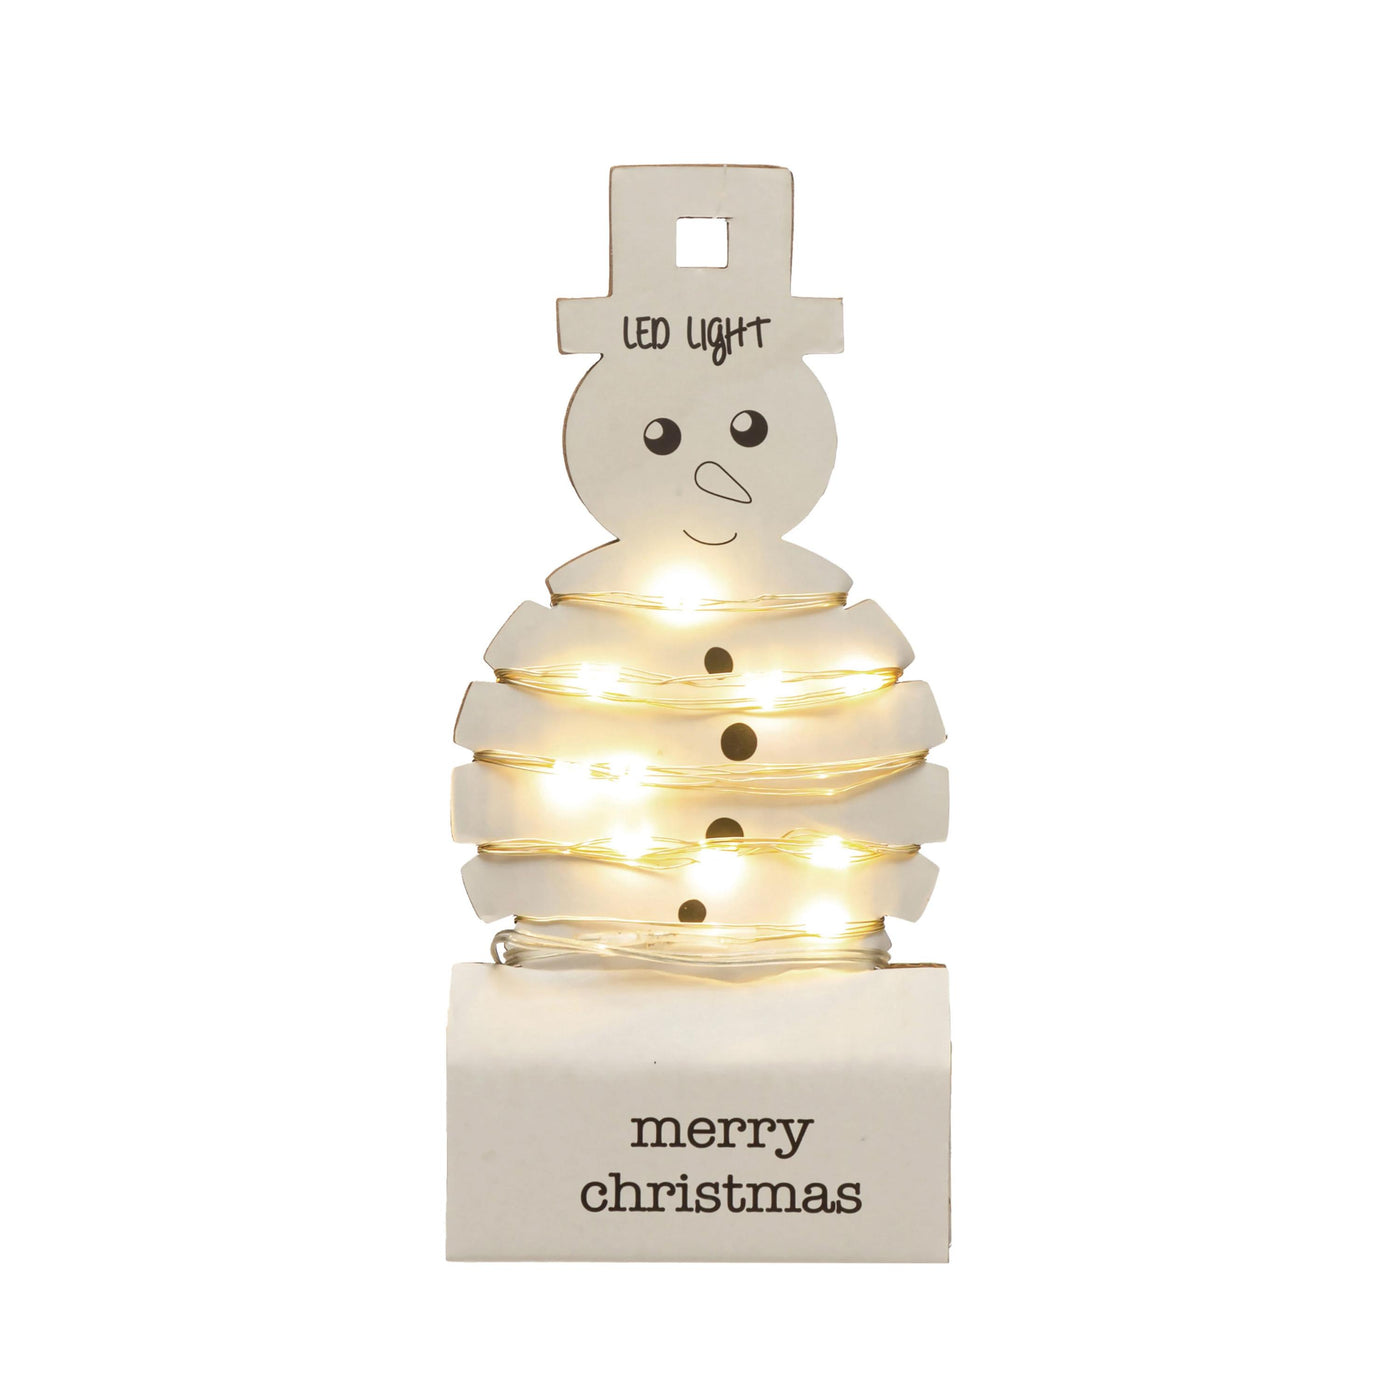 82"L LED String Lights on Snowman Shaped Card